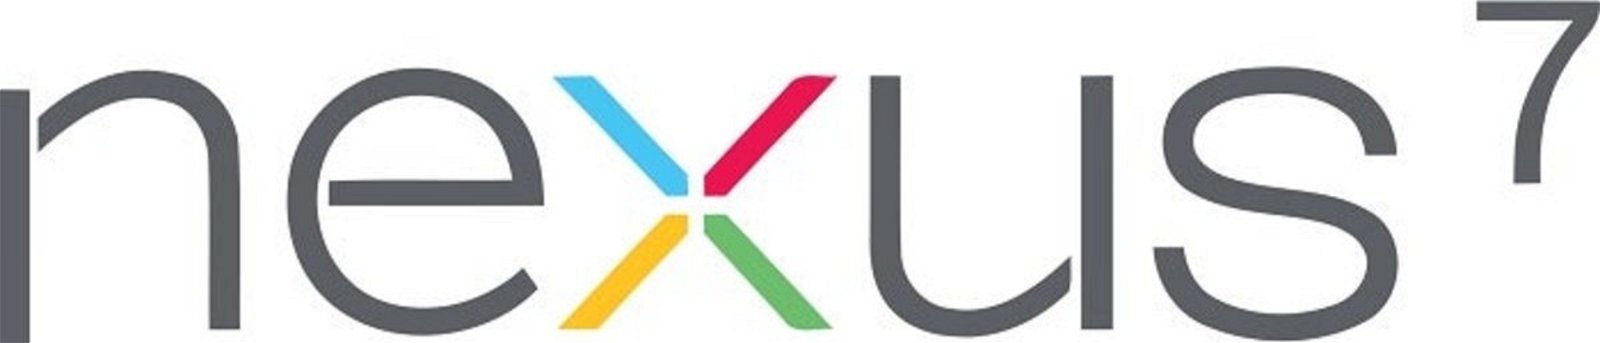 Nexus-7-Google-Logo